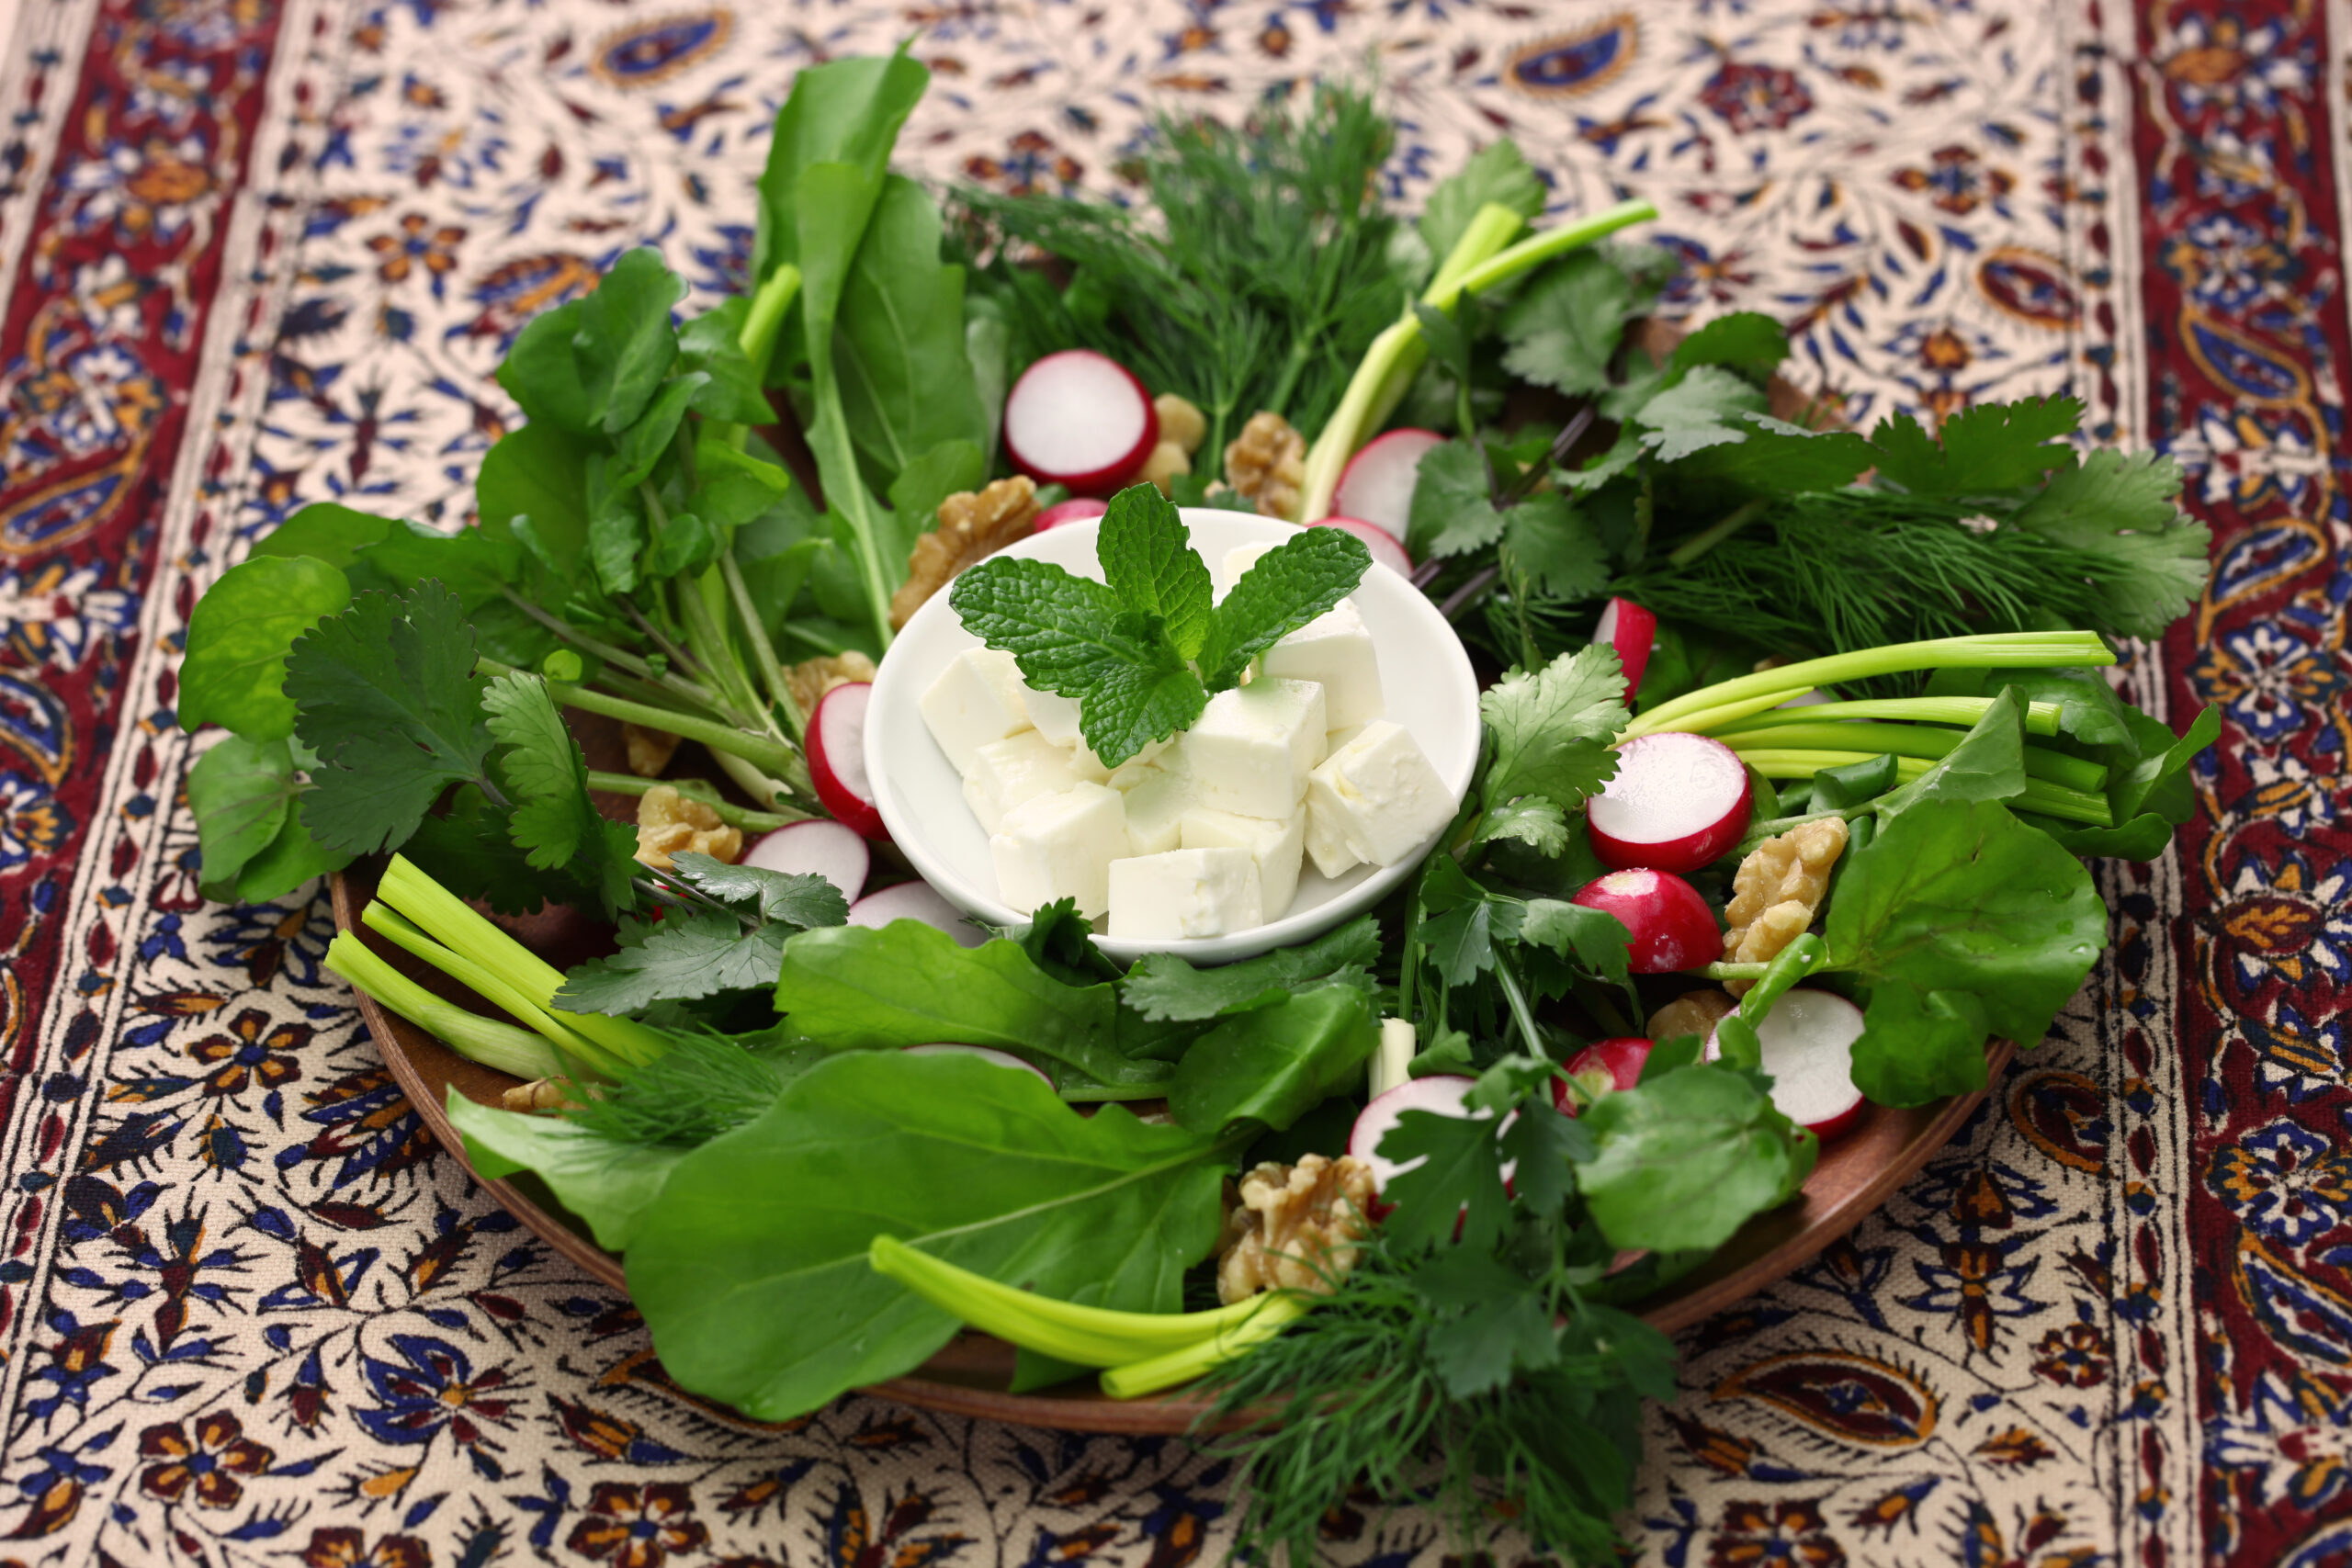 sabzi khordan, assortment of fresh herbs and raw vegetables salad, iranian cuisine